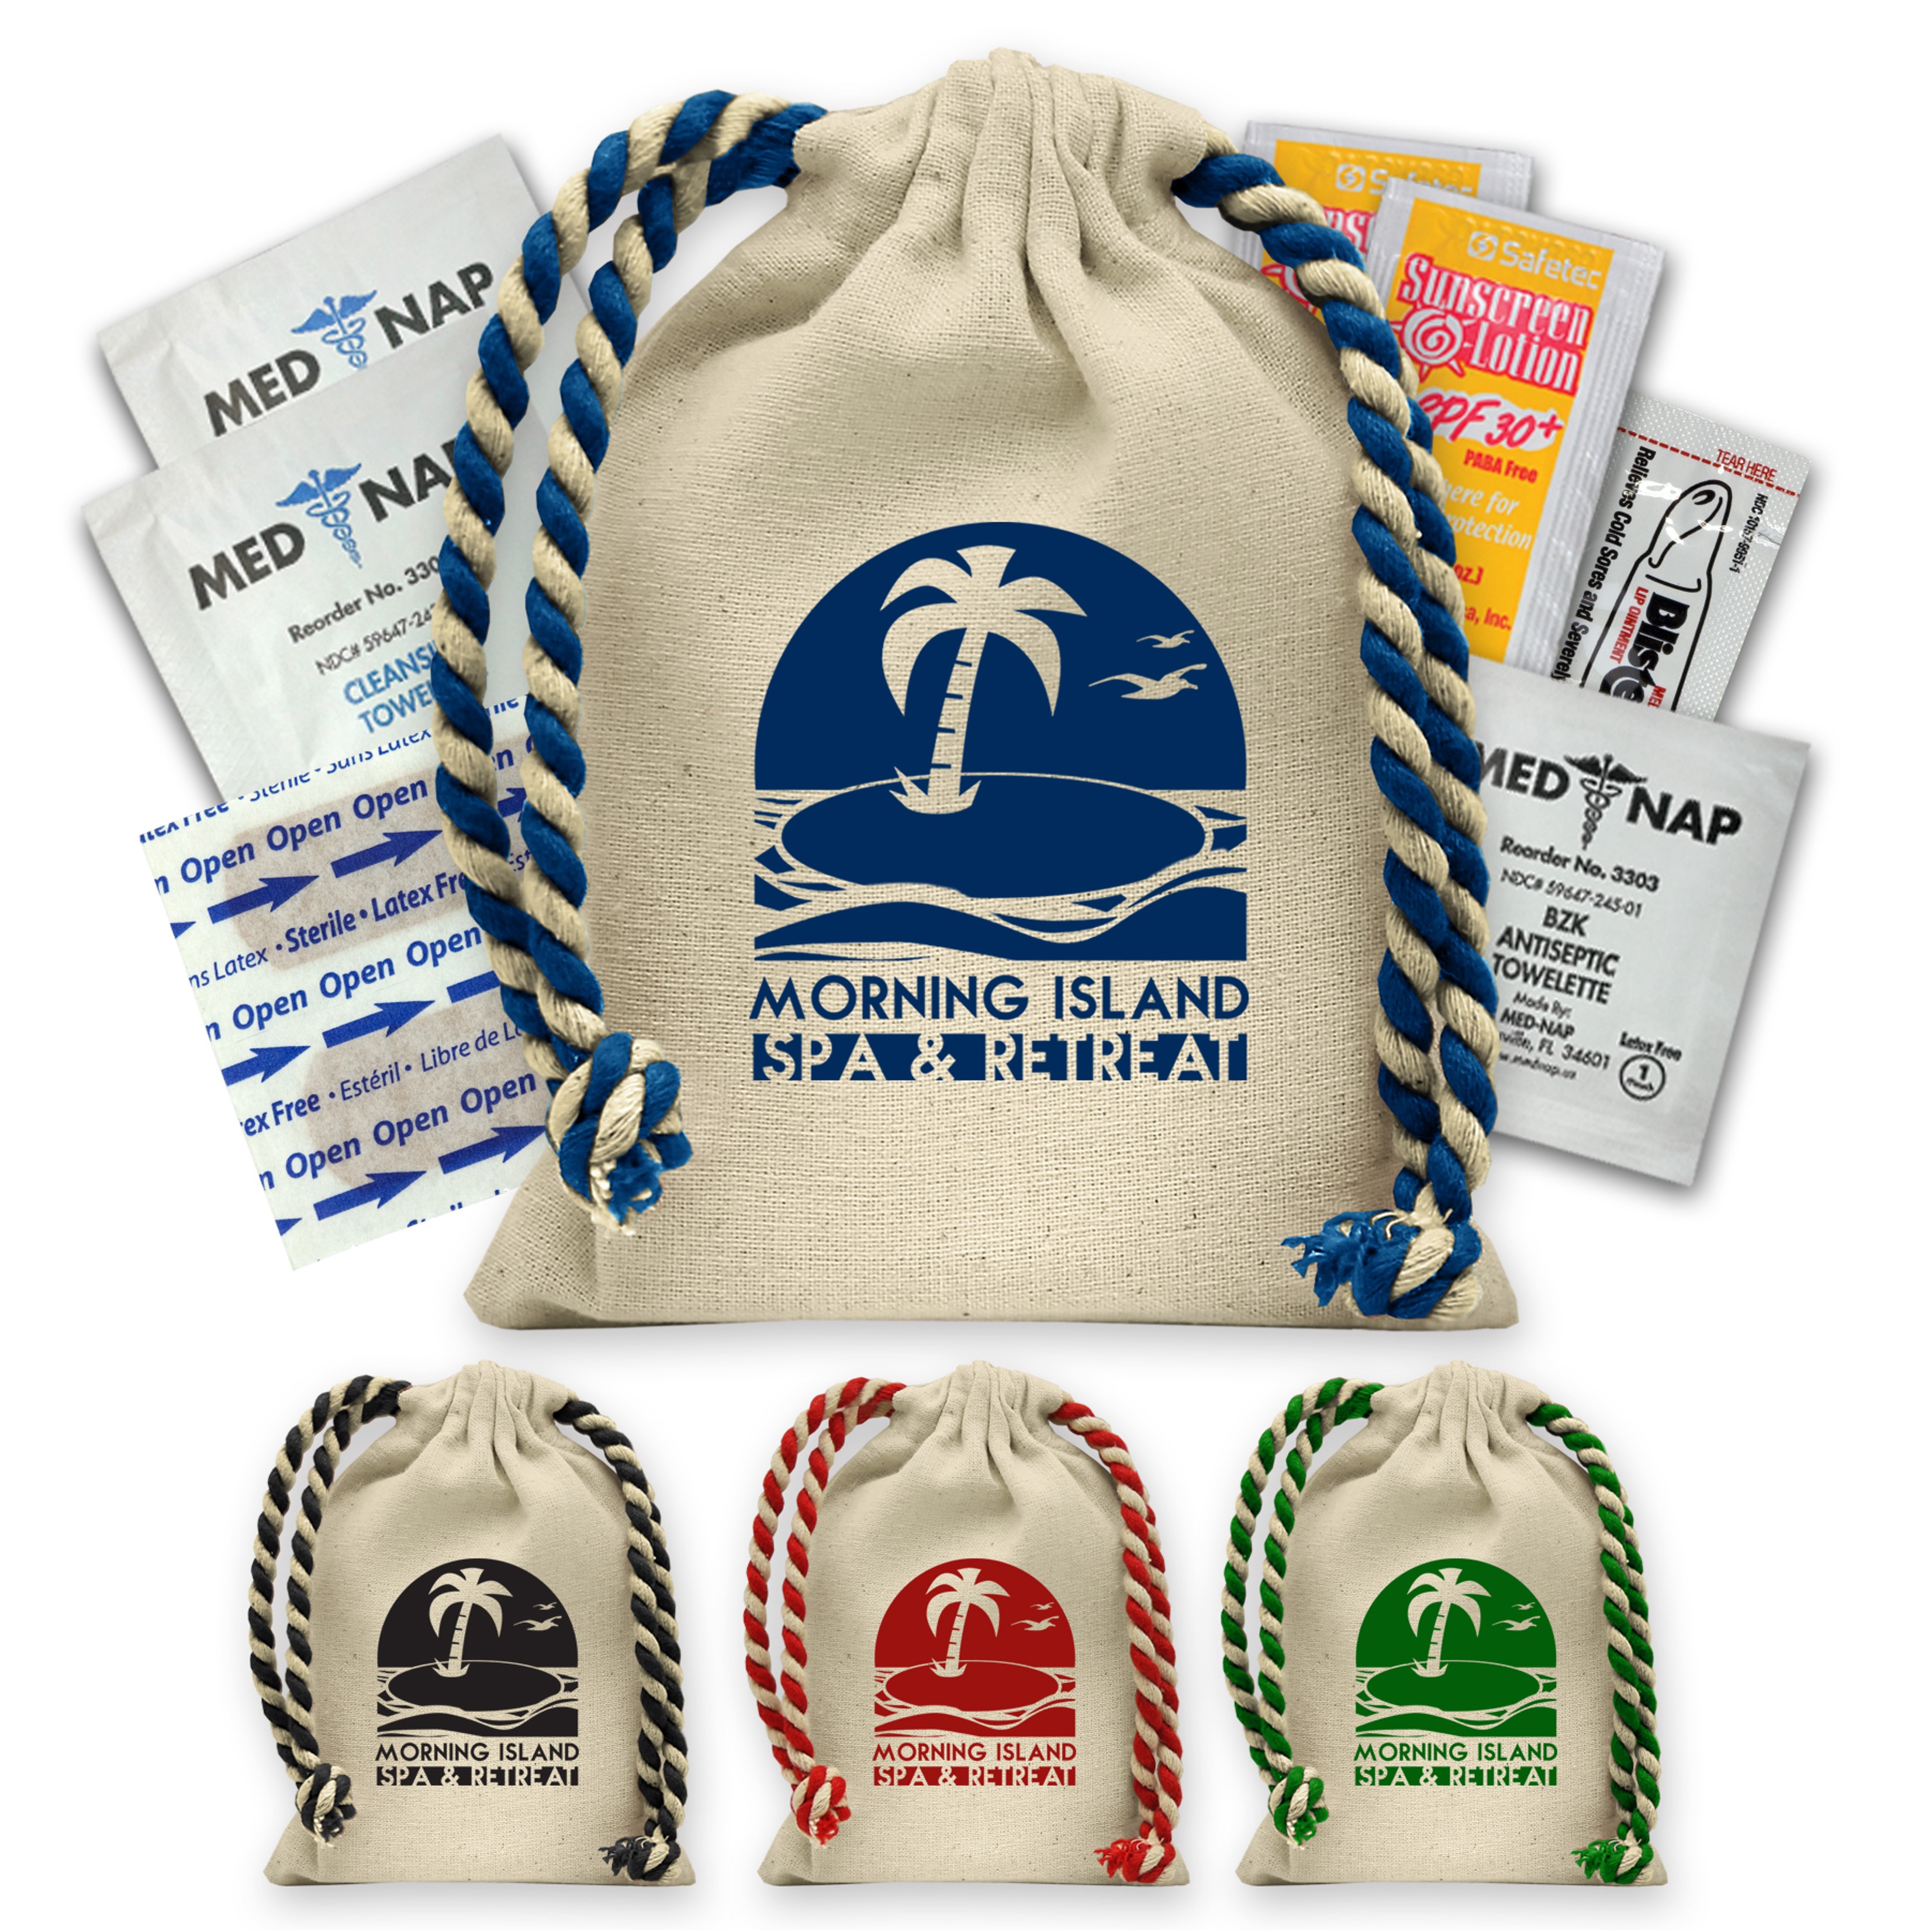 Promotional Sunscreen Kit | Cotton Bag | Reef Safe